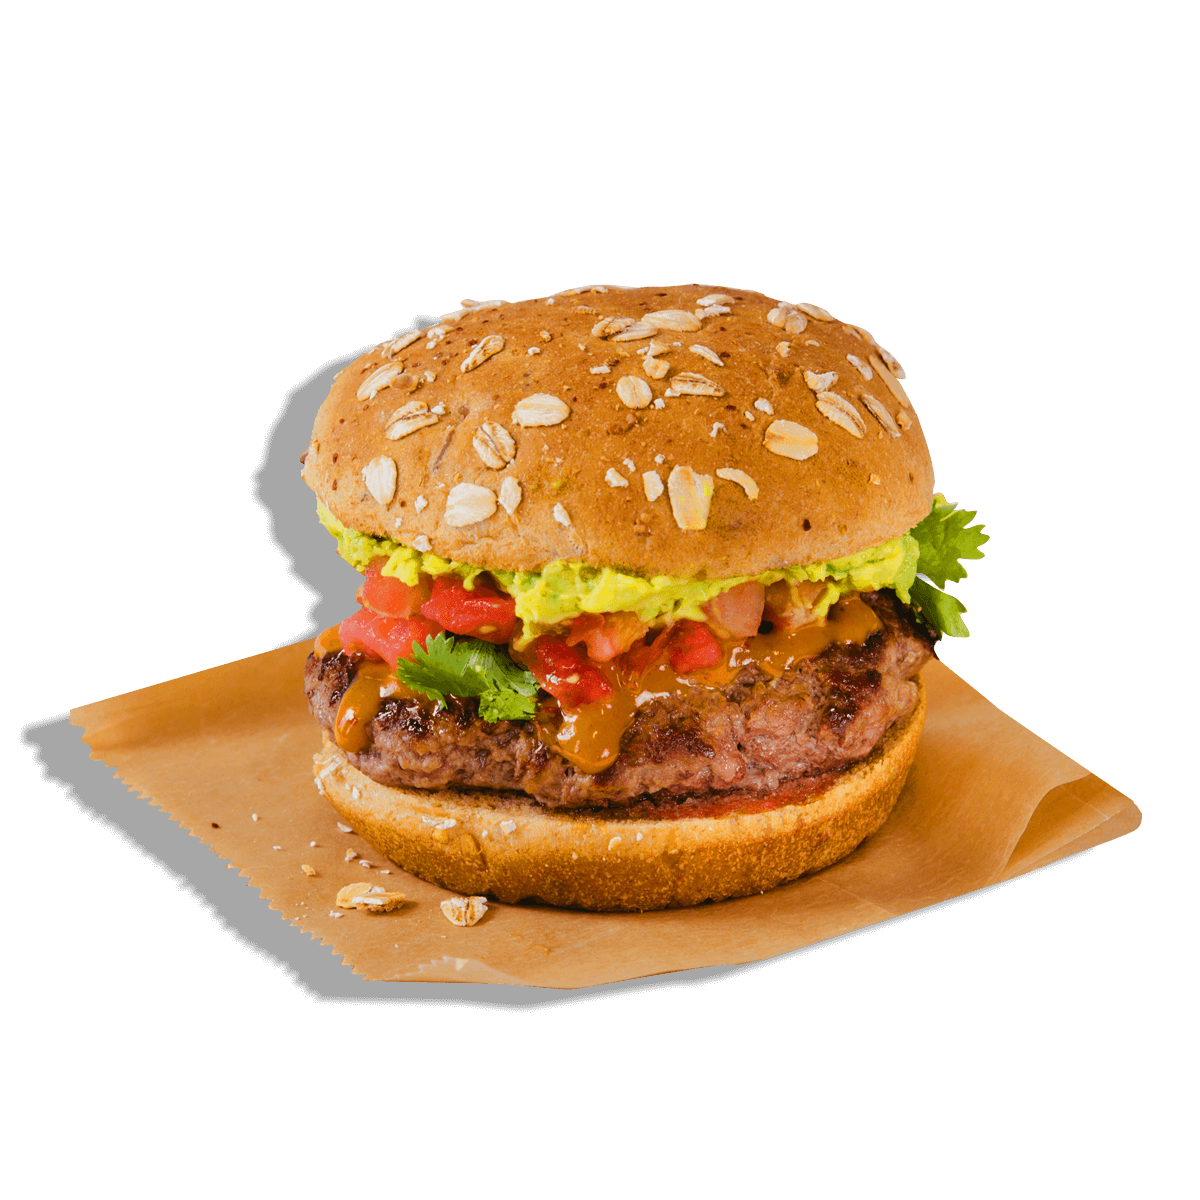 A B.Good burger